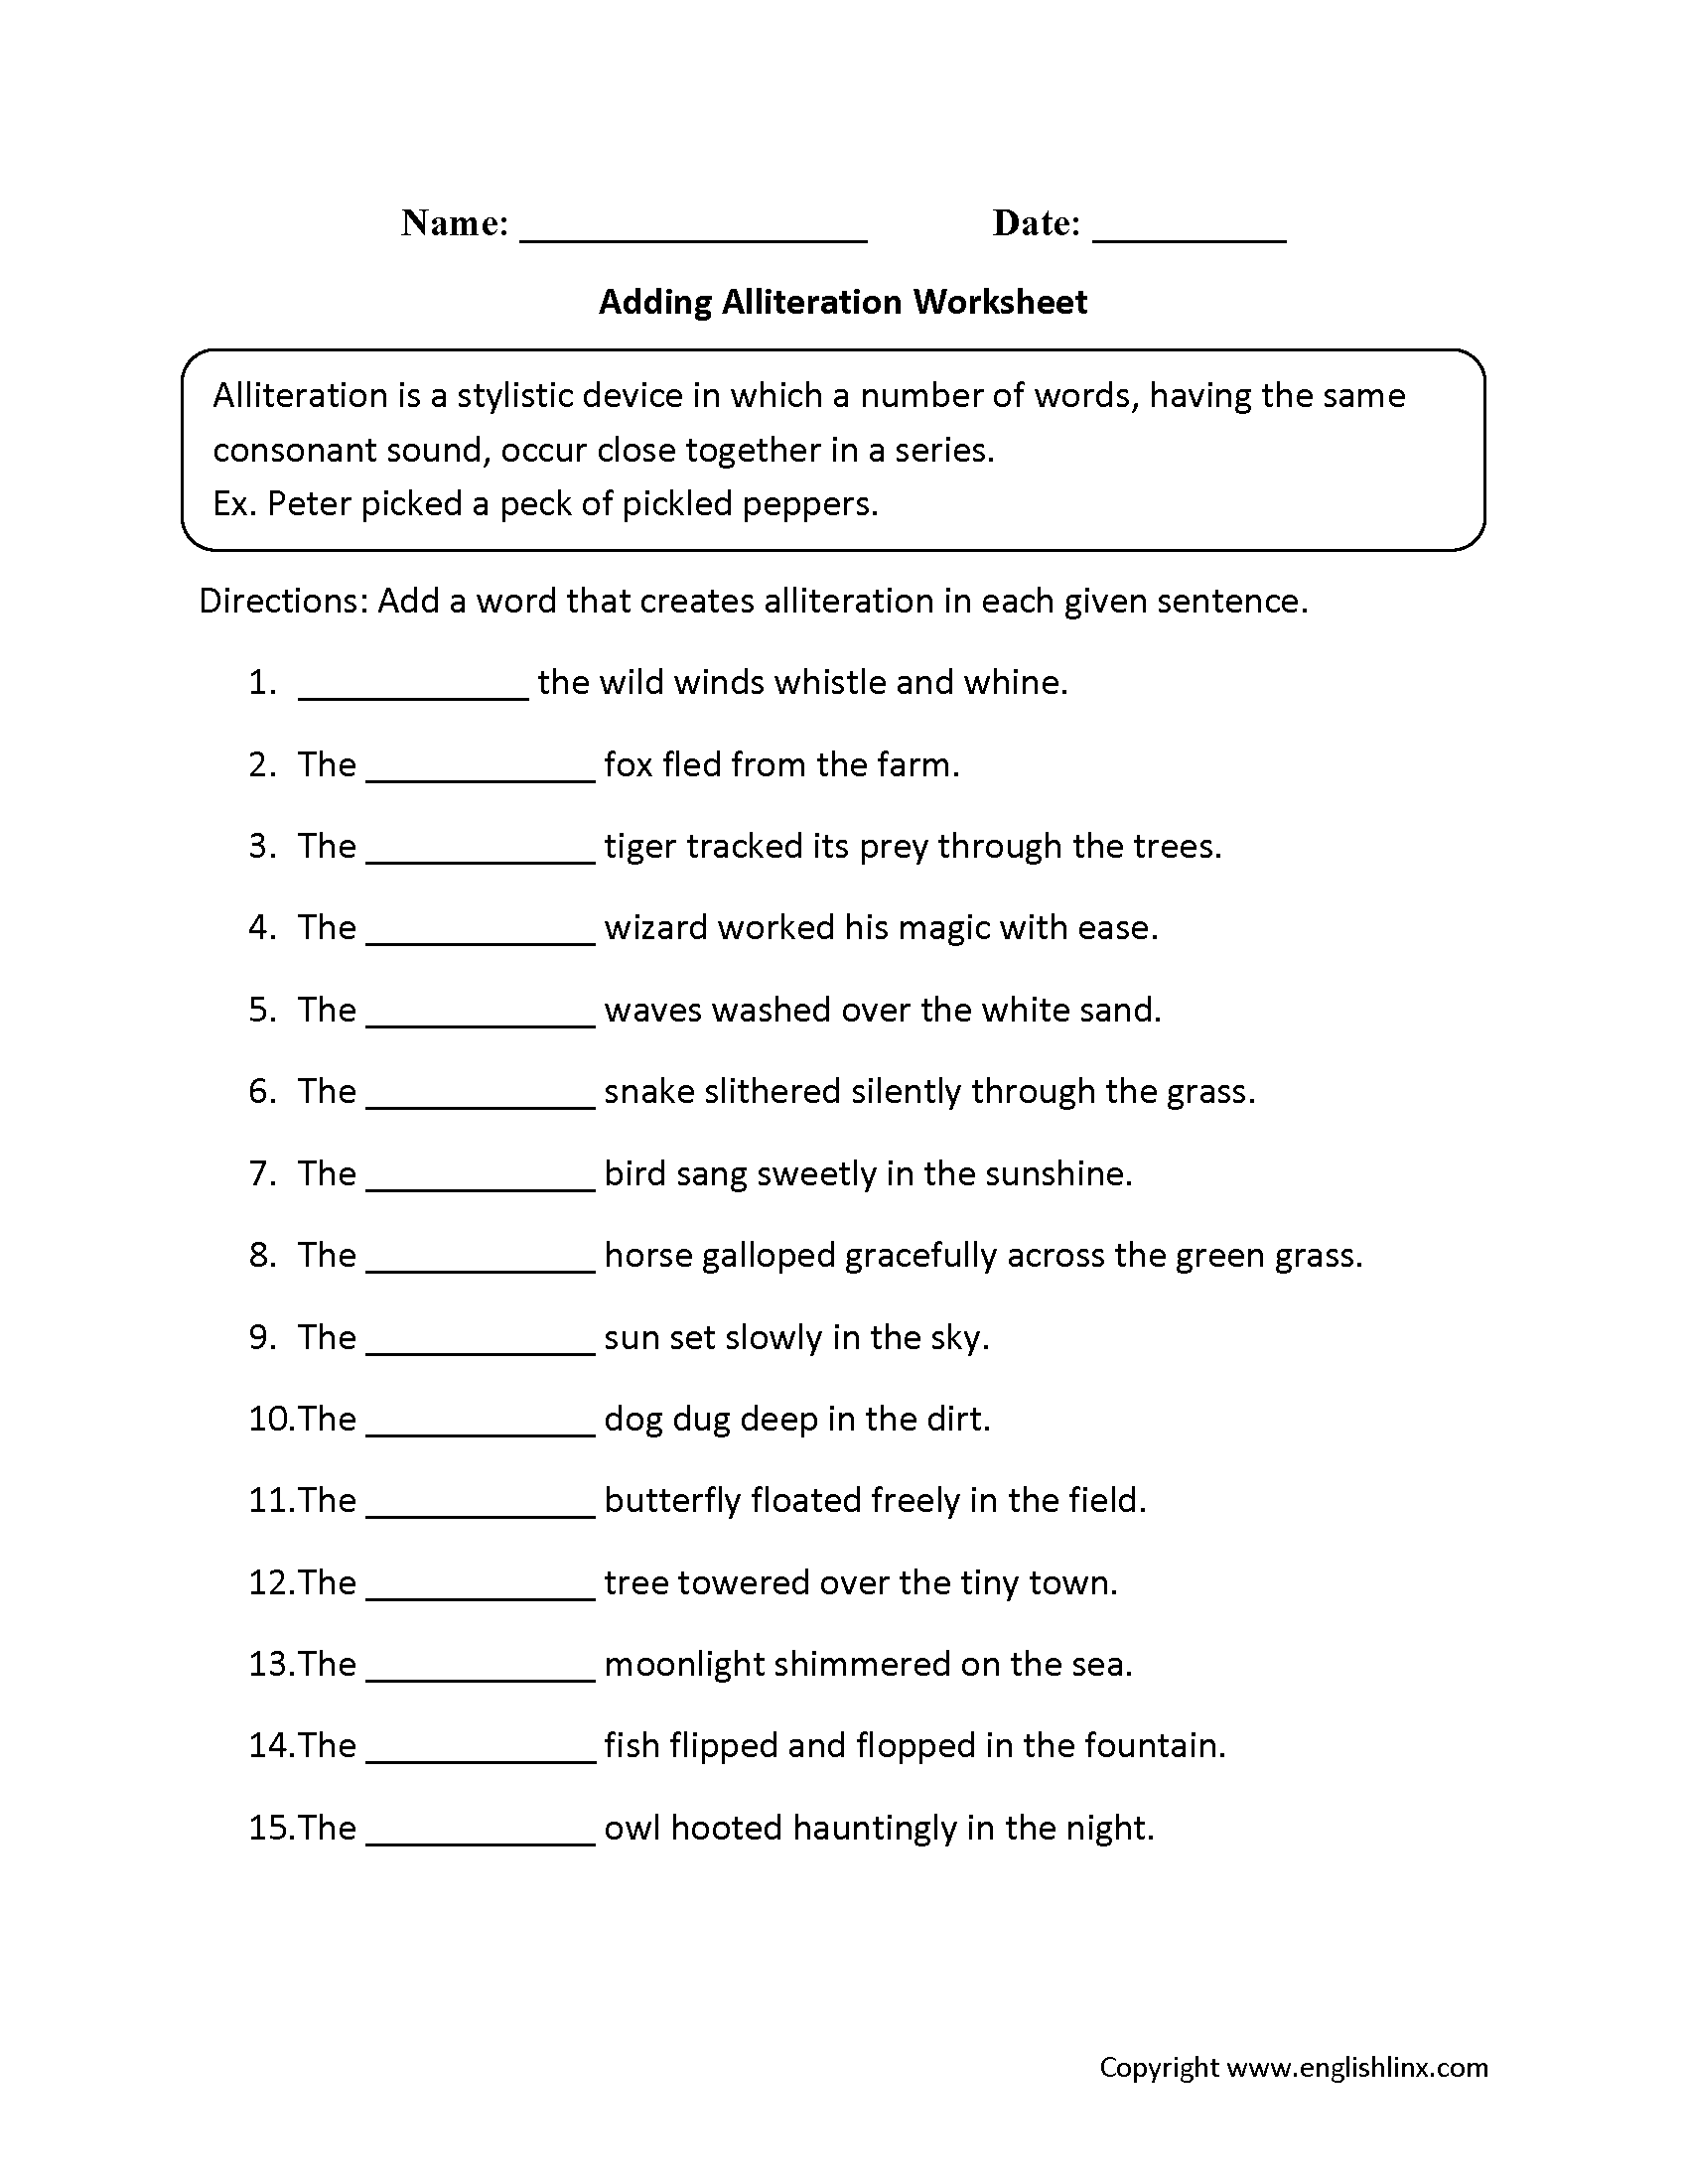 Adding Alliteration Worksheets